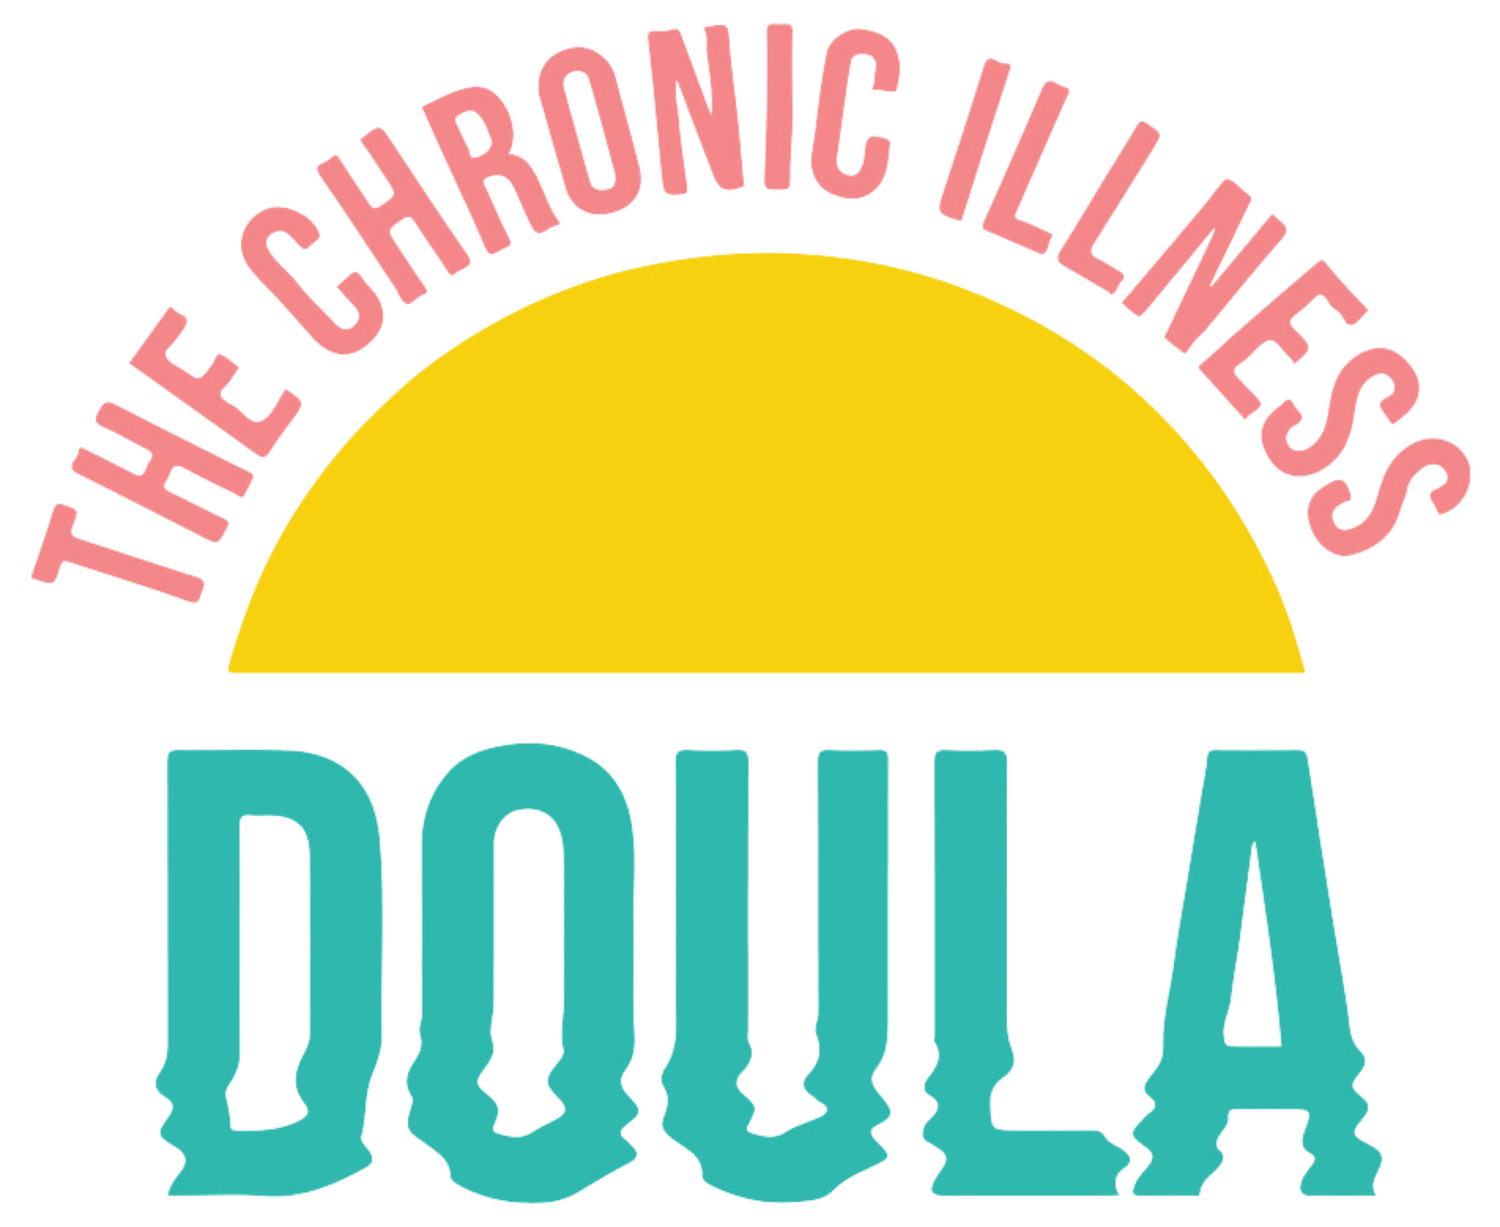 The Chronic Illness Doula